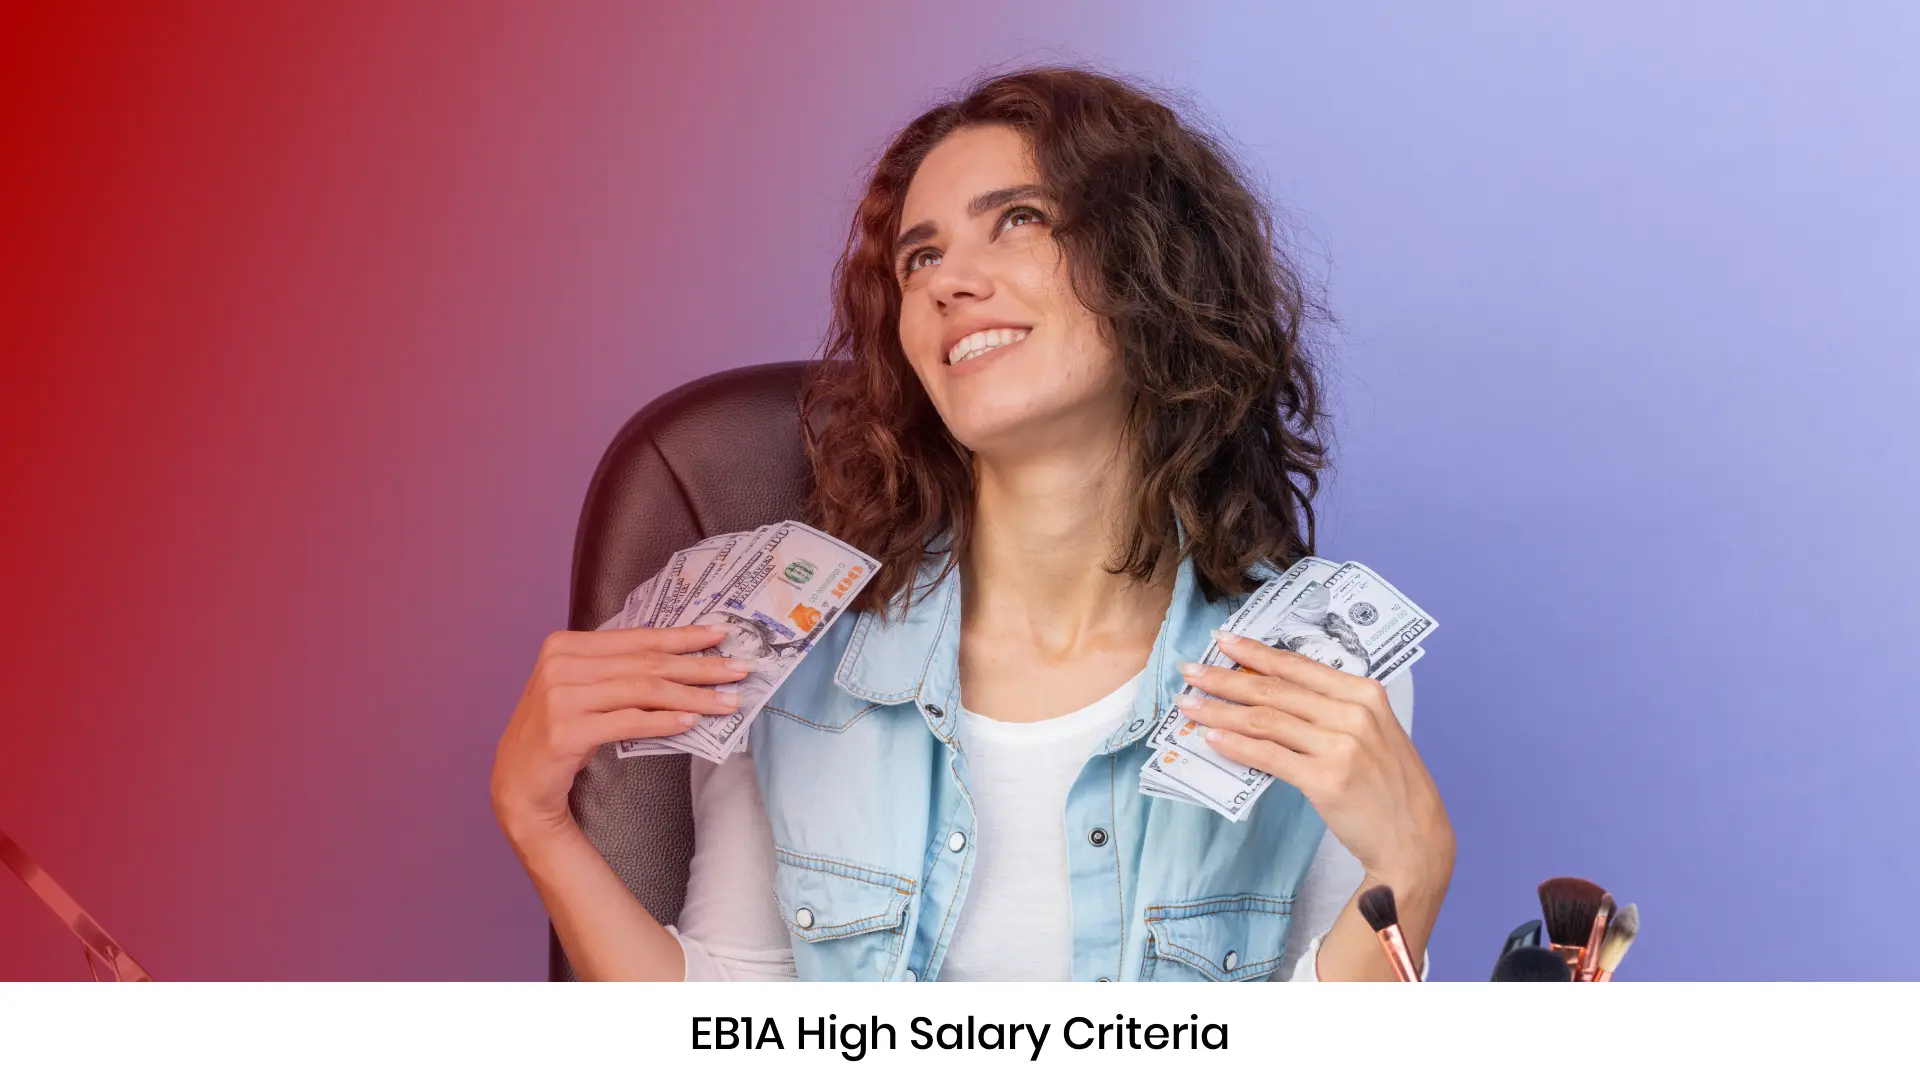 EB1A High Salary Criteria